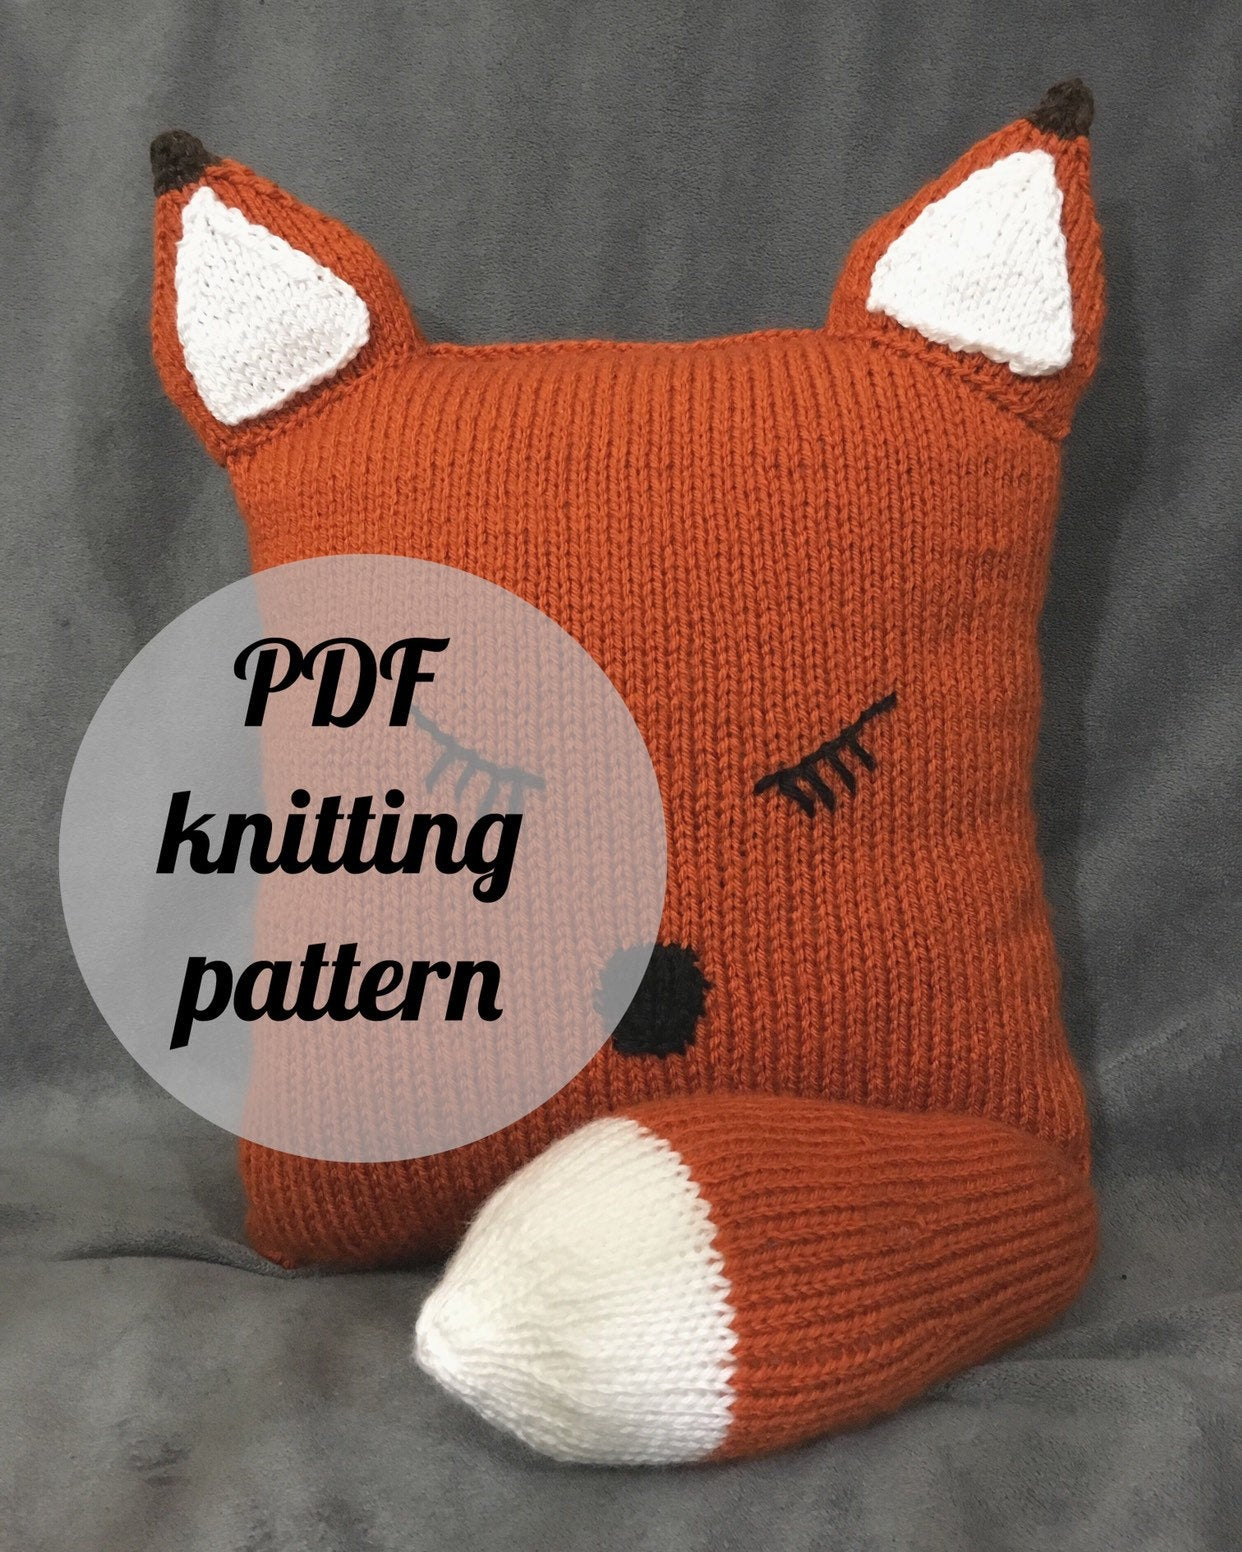 Easy To Follow Knitting Patterns Fox Pillow Knitting Pattern Easy To Follow Knitting Pattern Nursery Pillow Knitting Pattern Woodland Fox Pillow Knitting Pattern